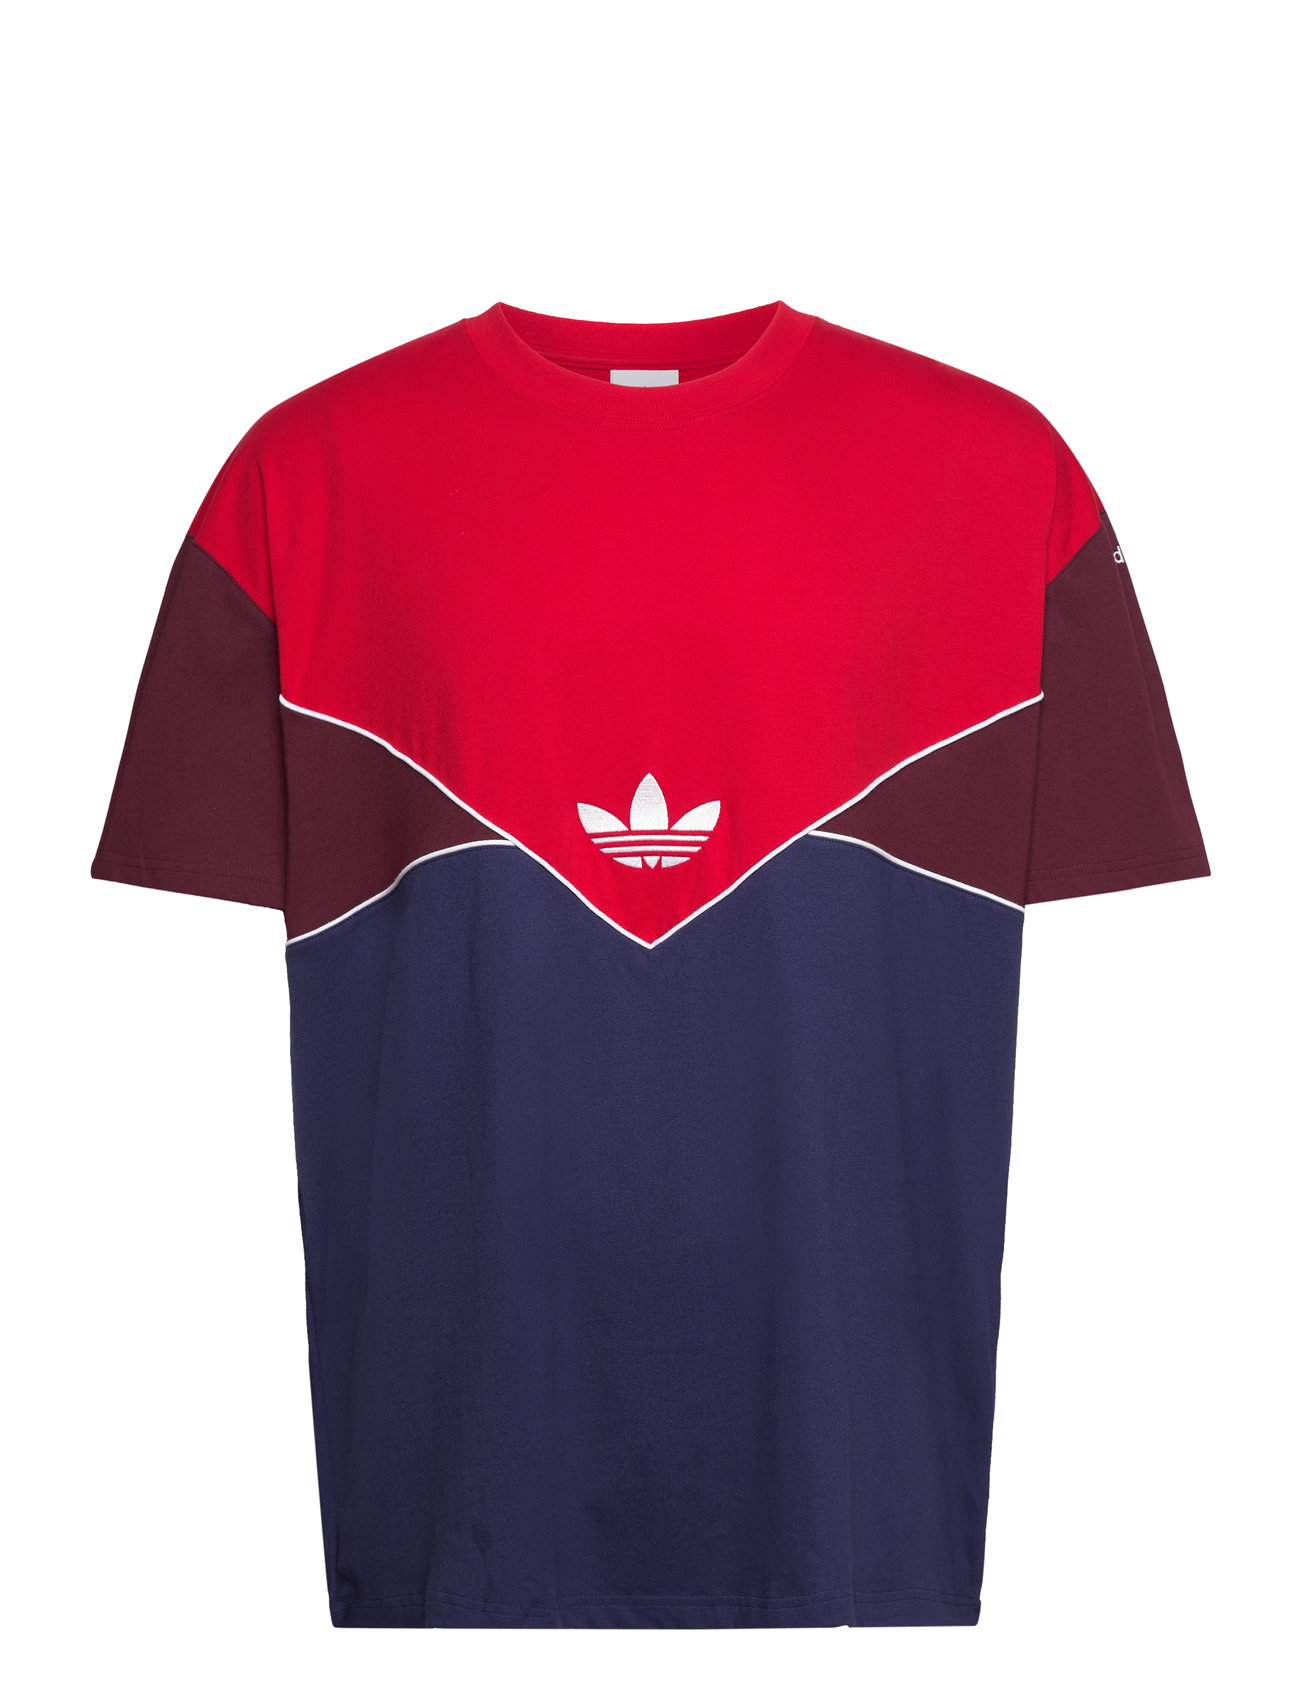 Adicolor Seasonal Archive T-Shirt Sport T-shirts Short-sleeved Red Adidas Originals